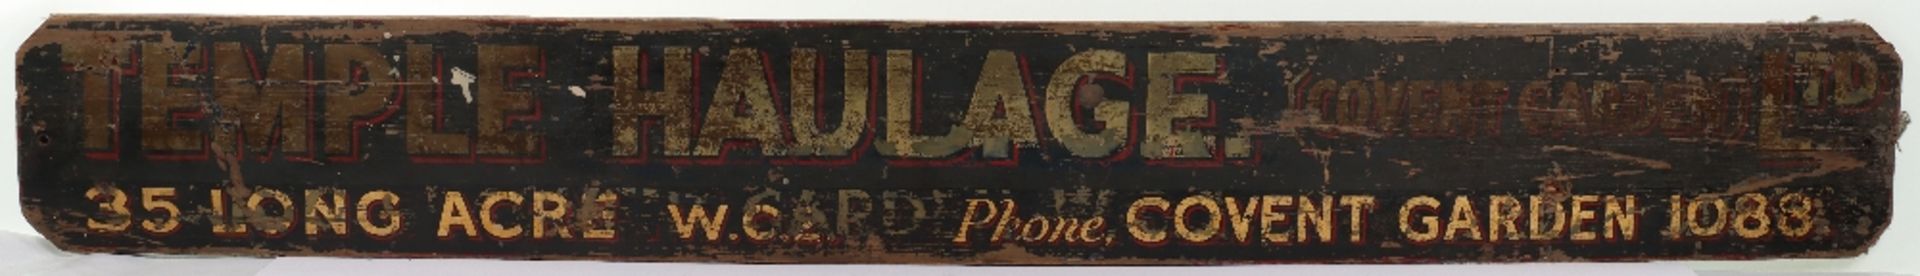 A vintage painted wood sign ‘Temple Haulage (Covent Garden Ltd) 35 Long Acre W.C.2, Phone, Covent Ga